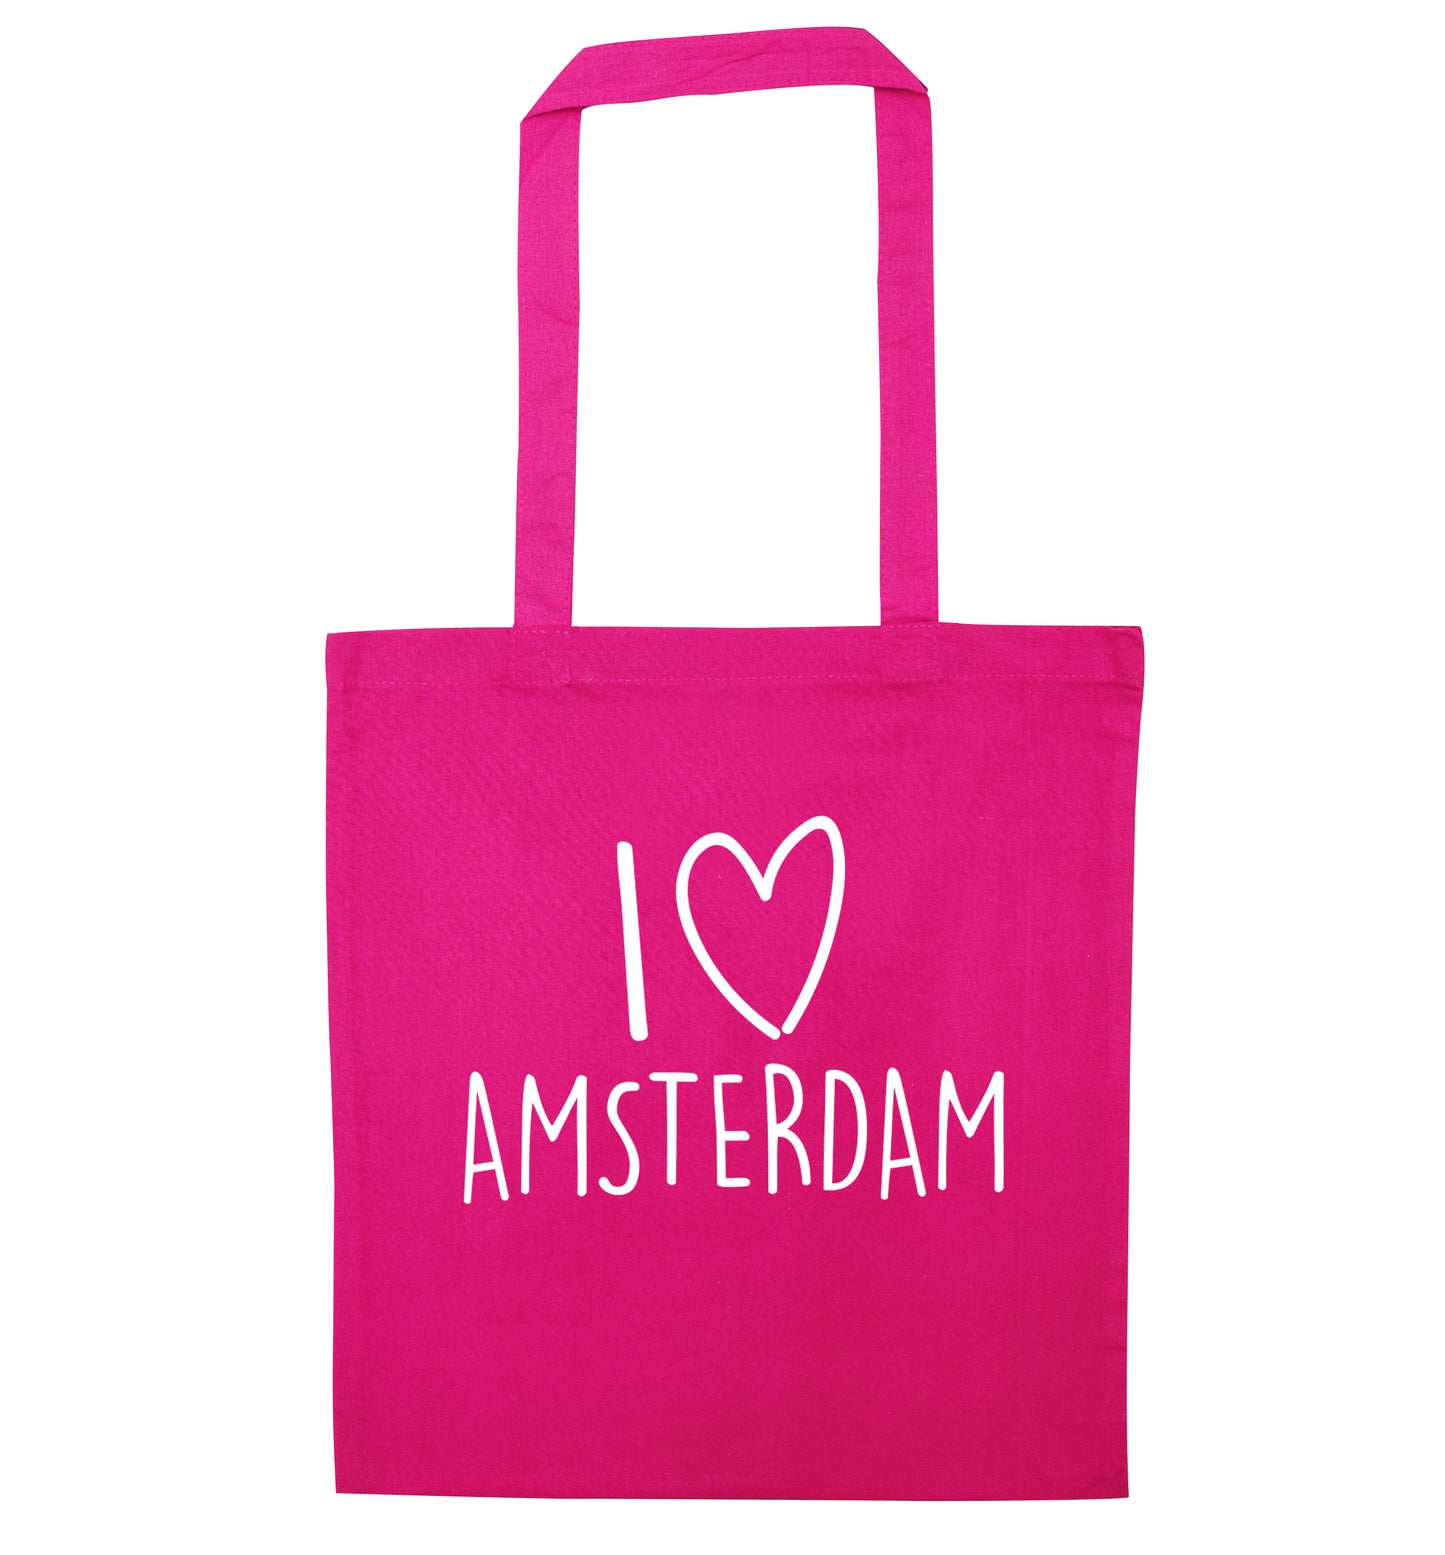 I love Amsterdam pink tote bag